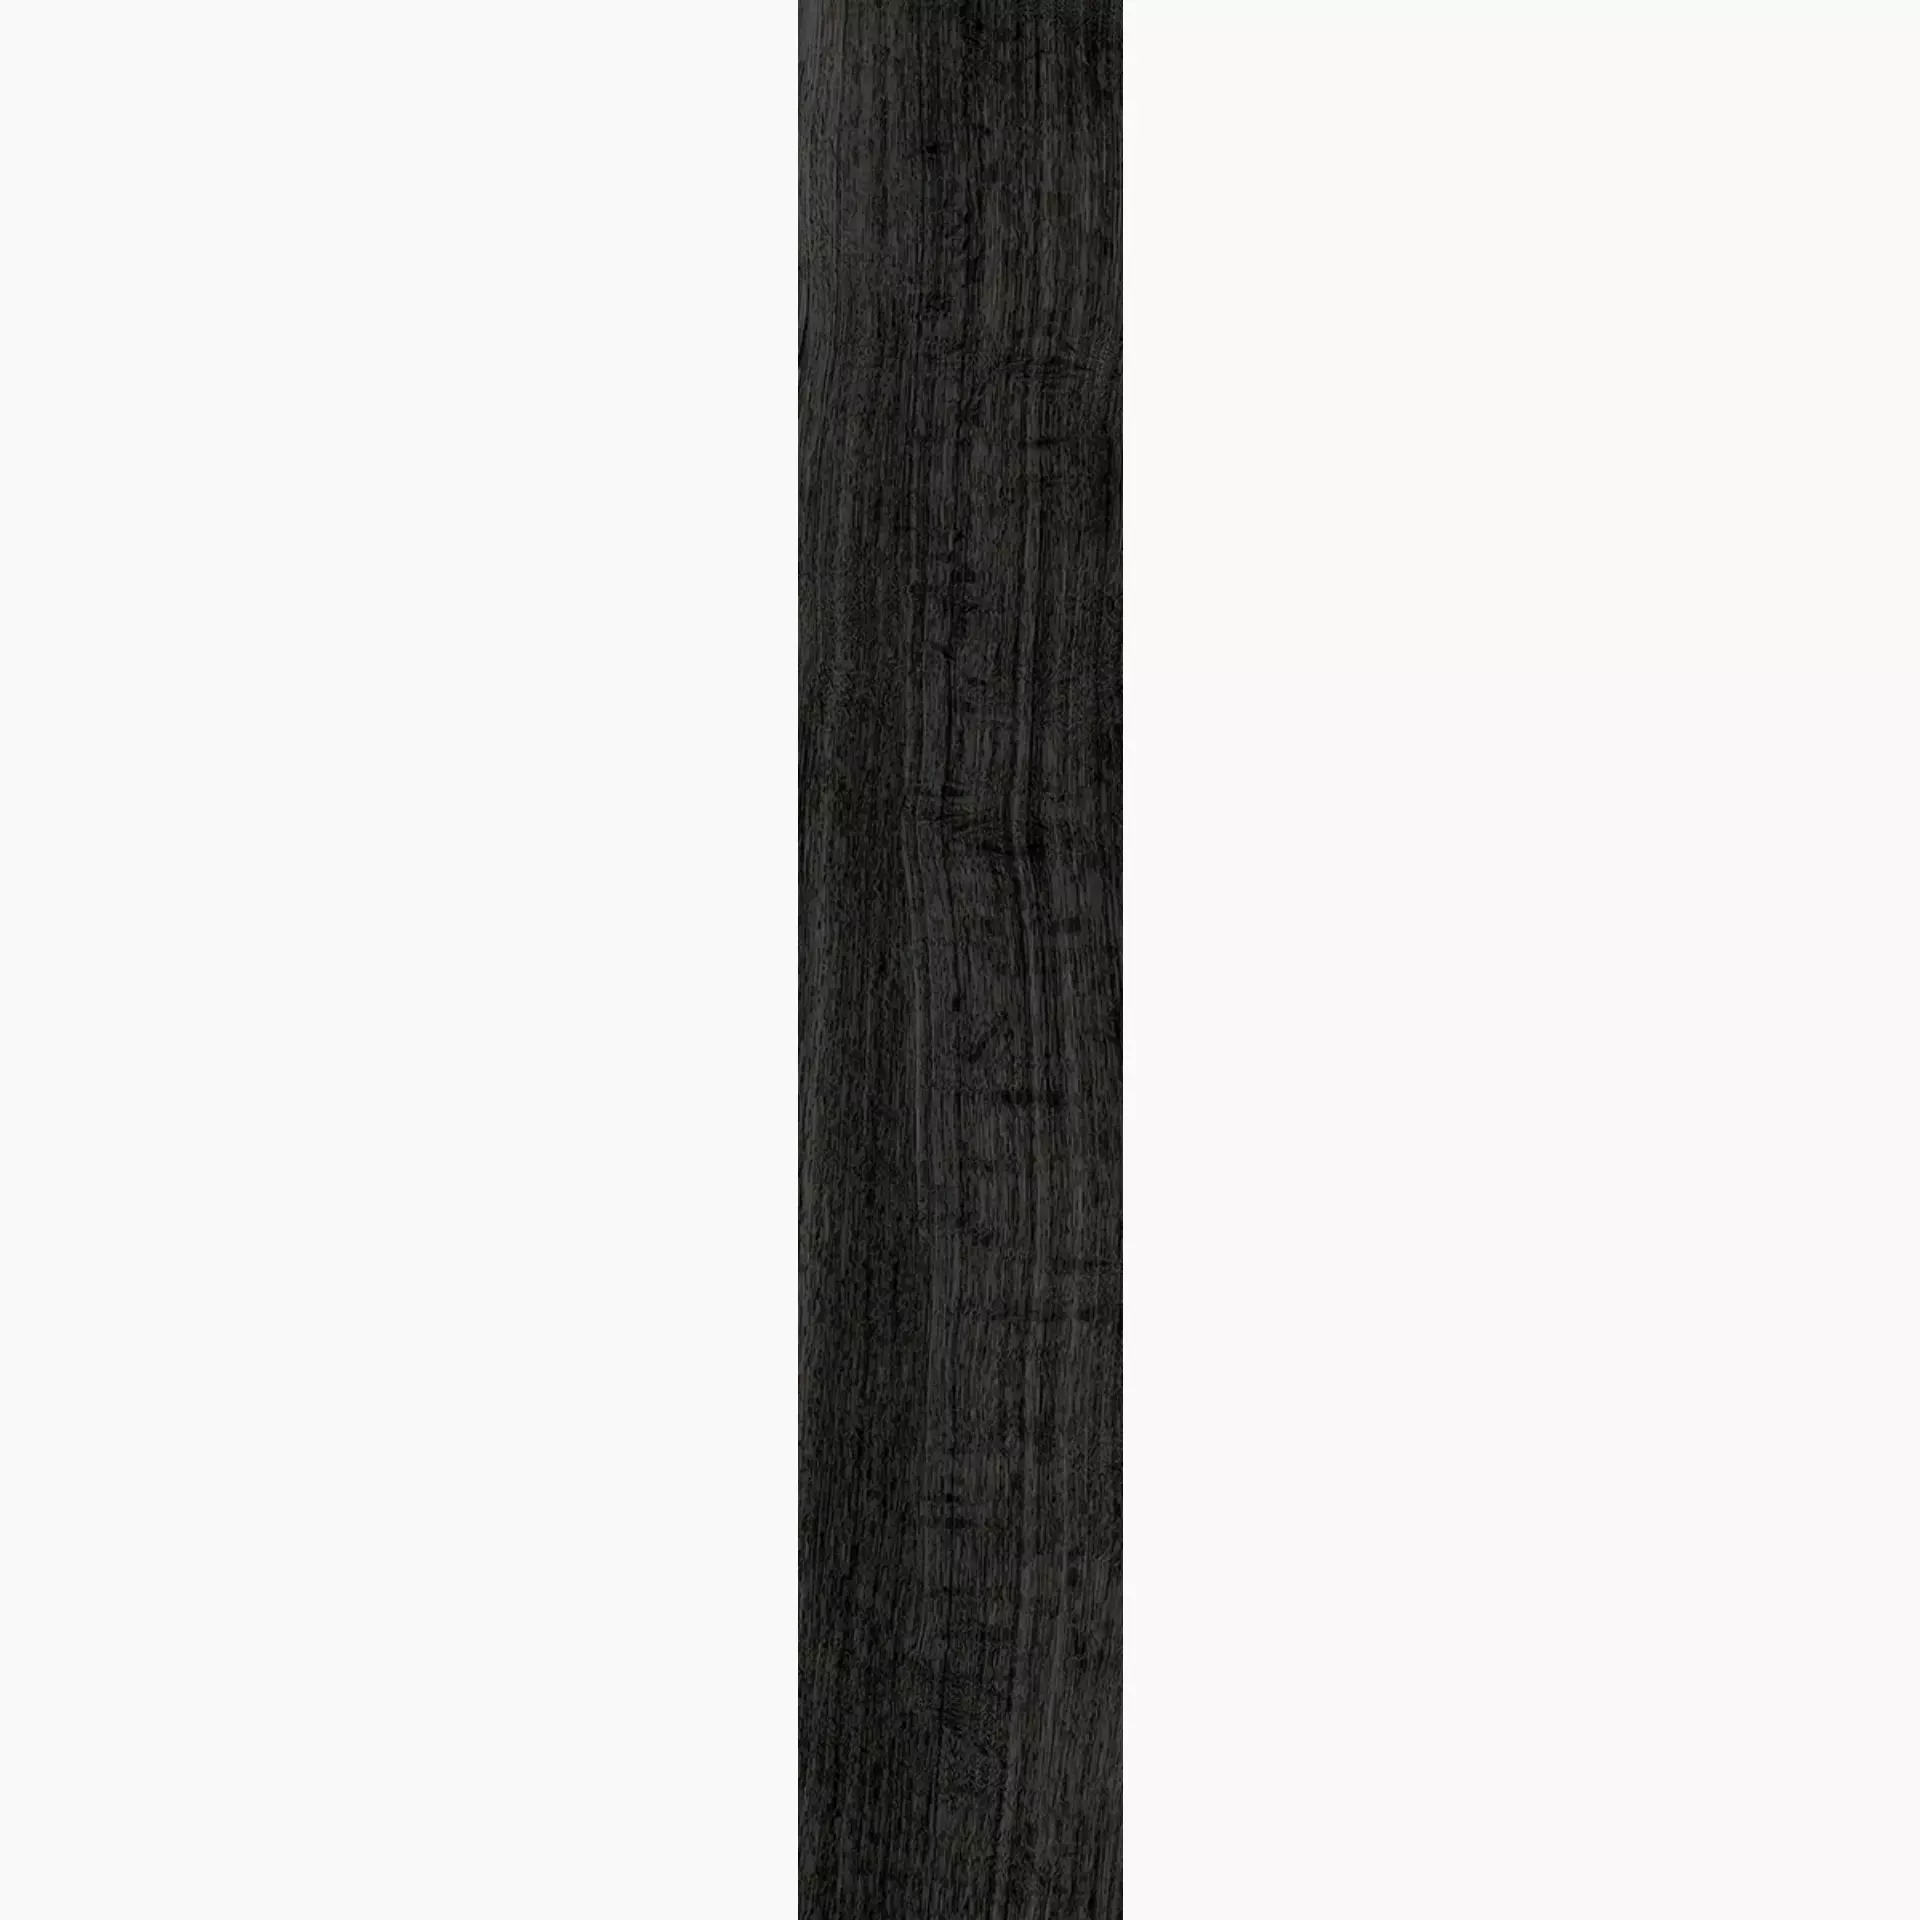 Rondine Living Nero Naturale J86351 7,5x45cm 9,5mm